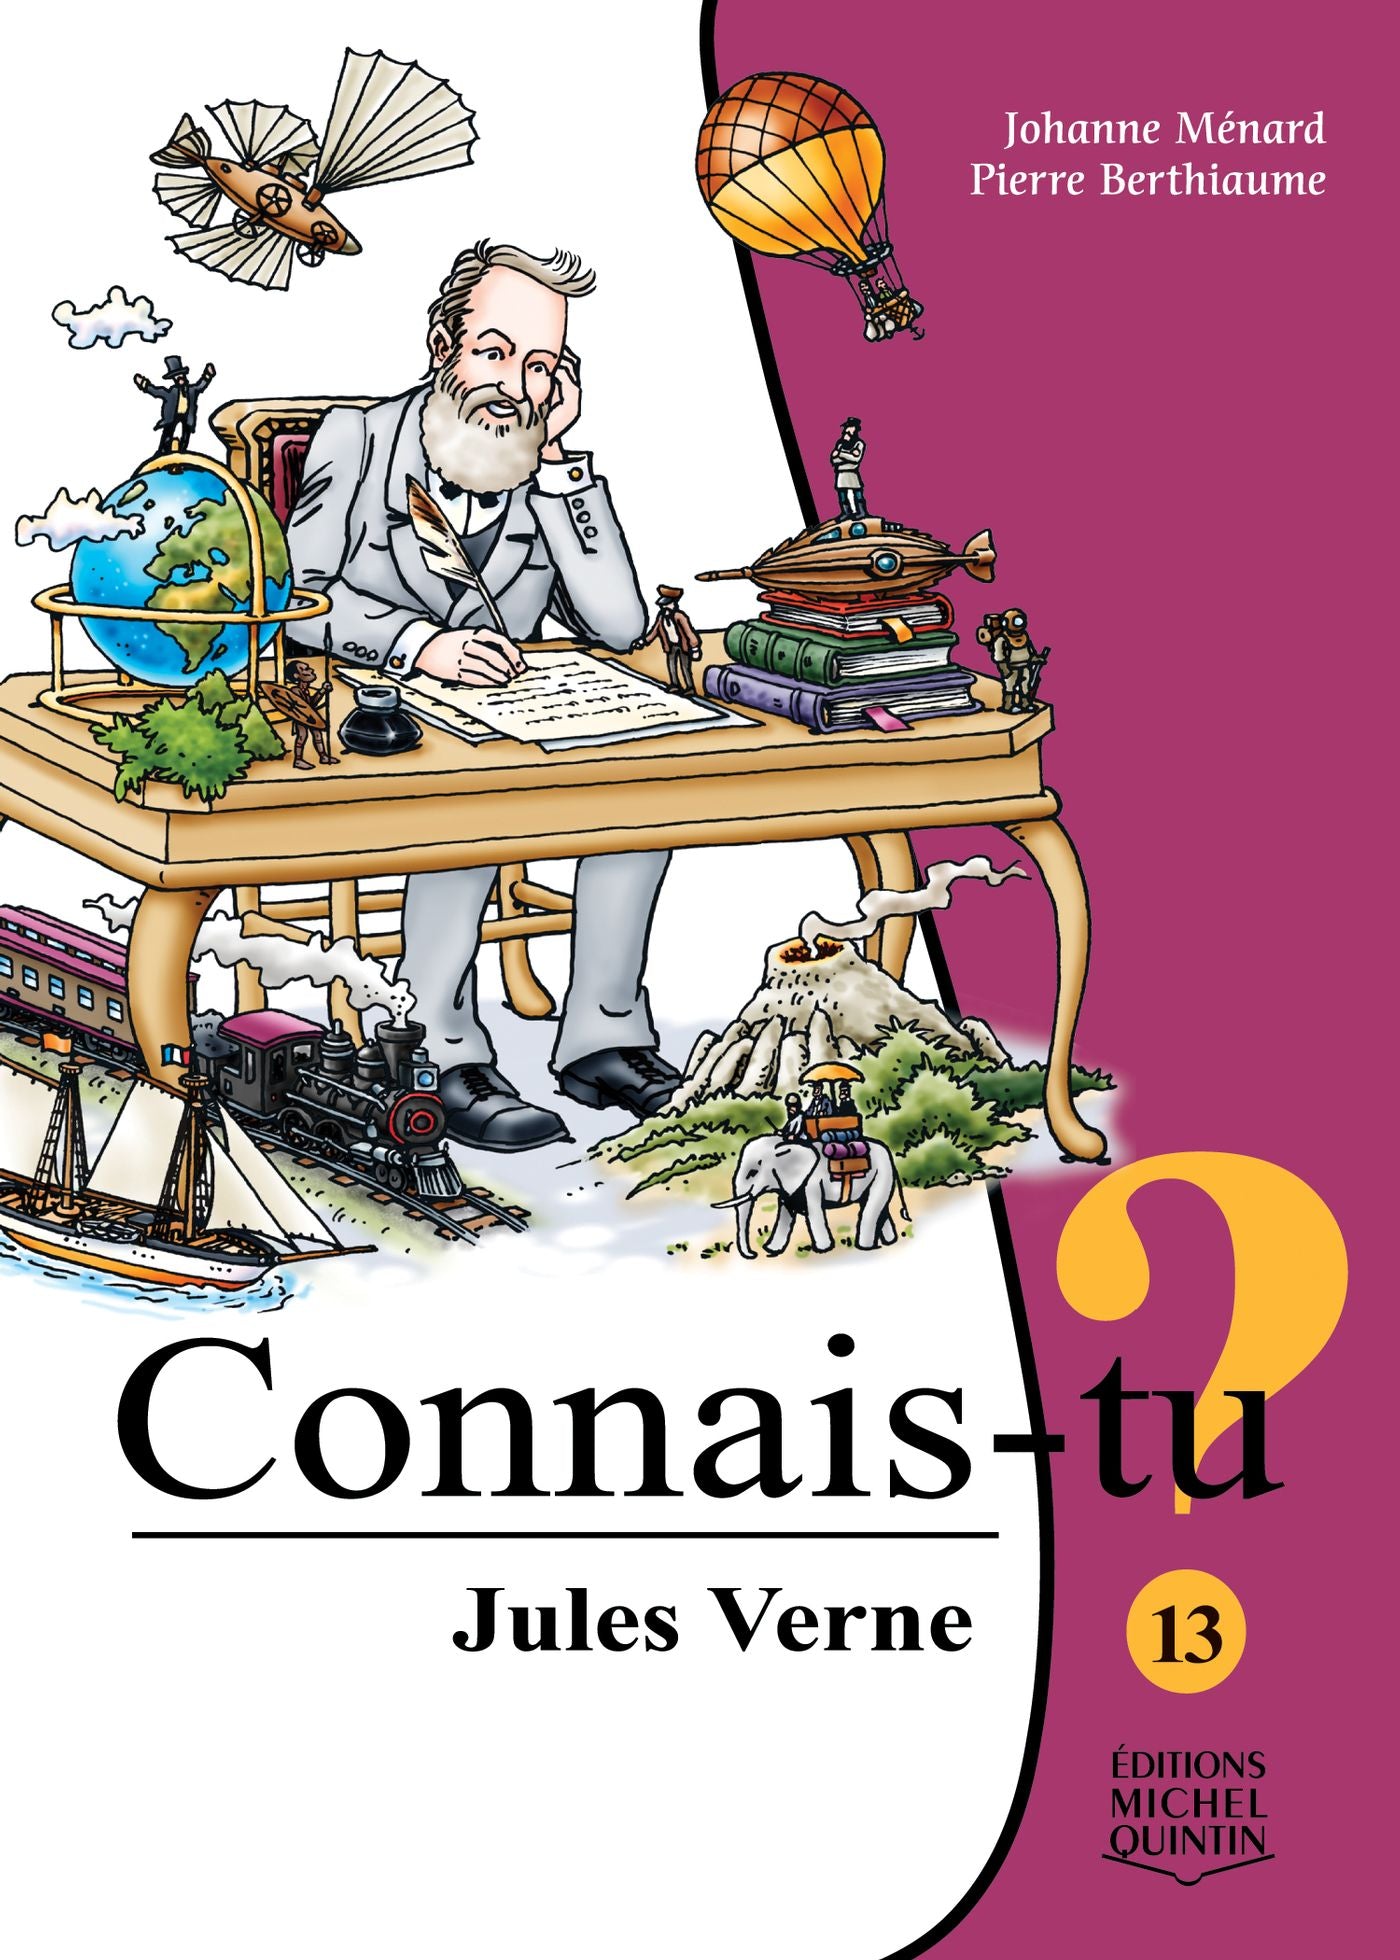 Connais-tu? # 13 : Jules Verne - Johanne Ménard